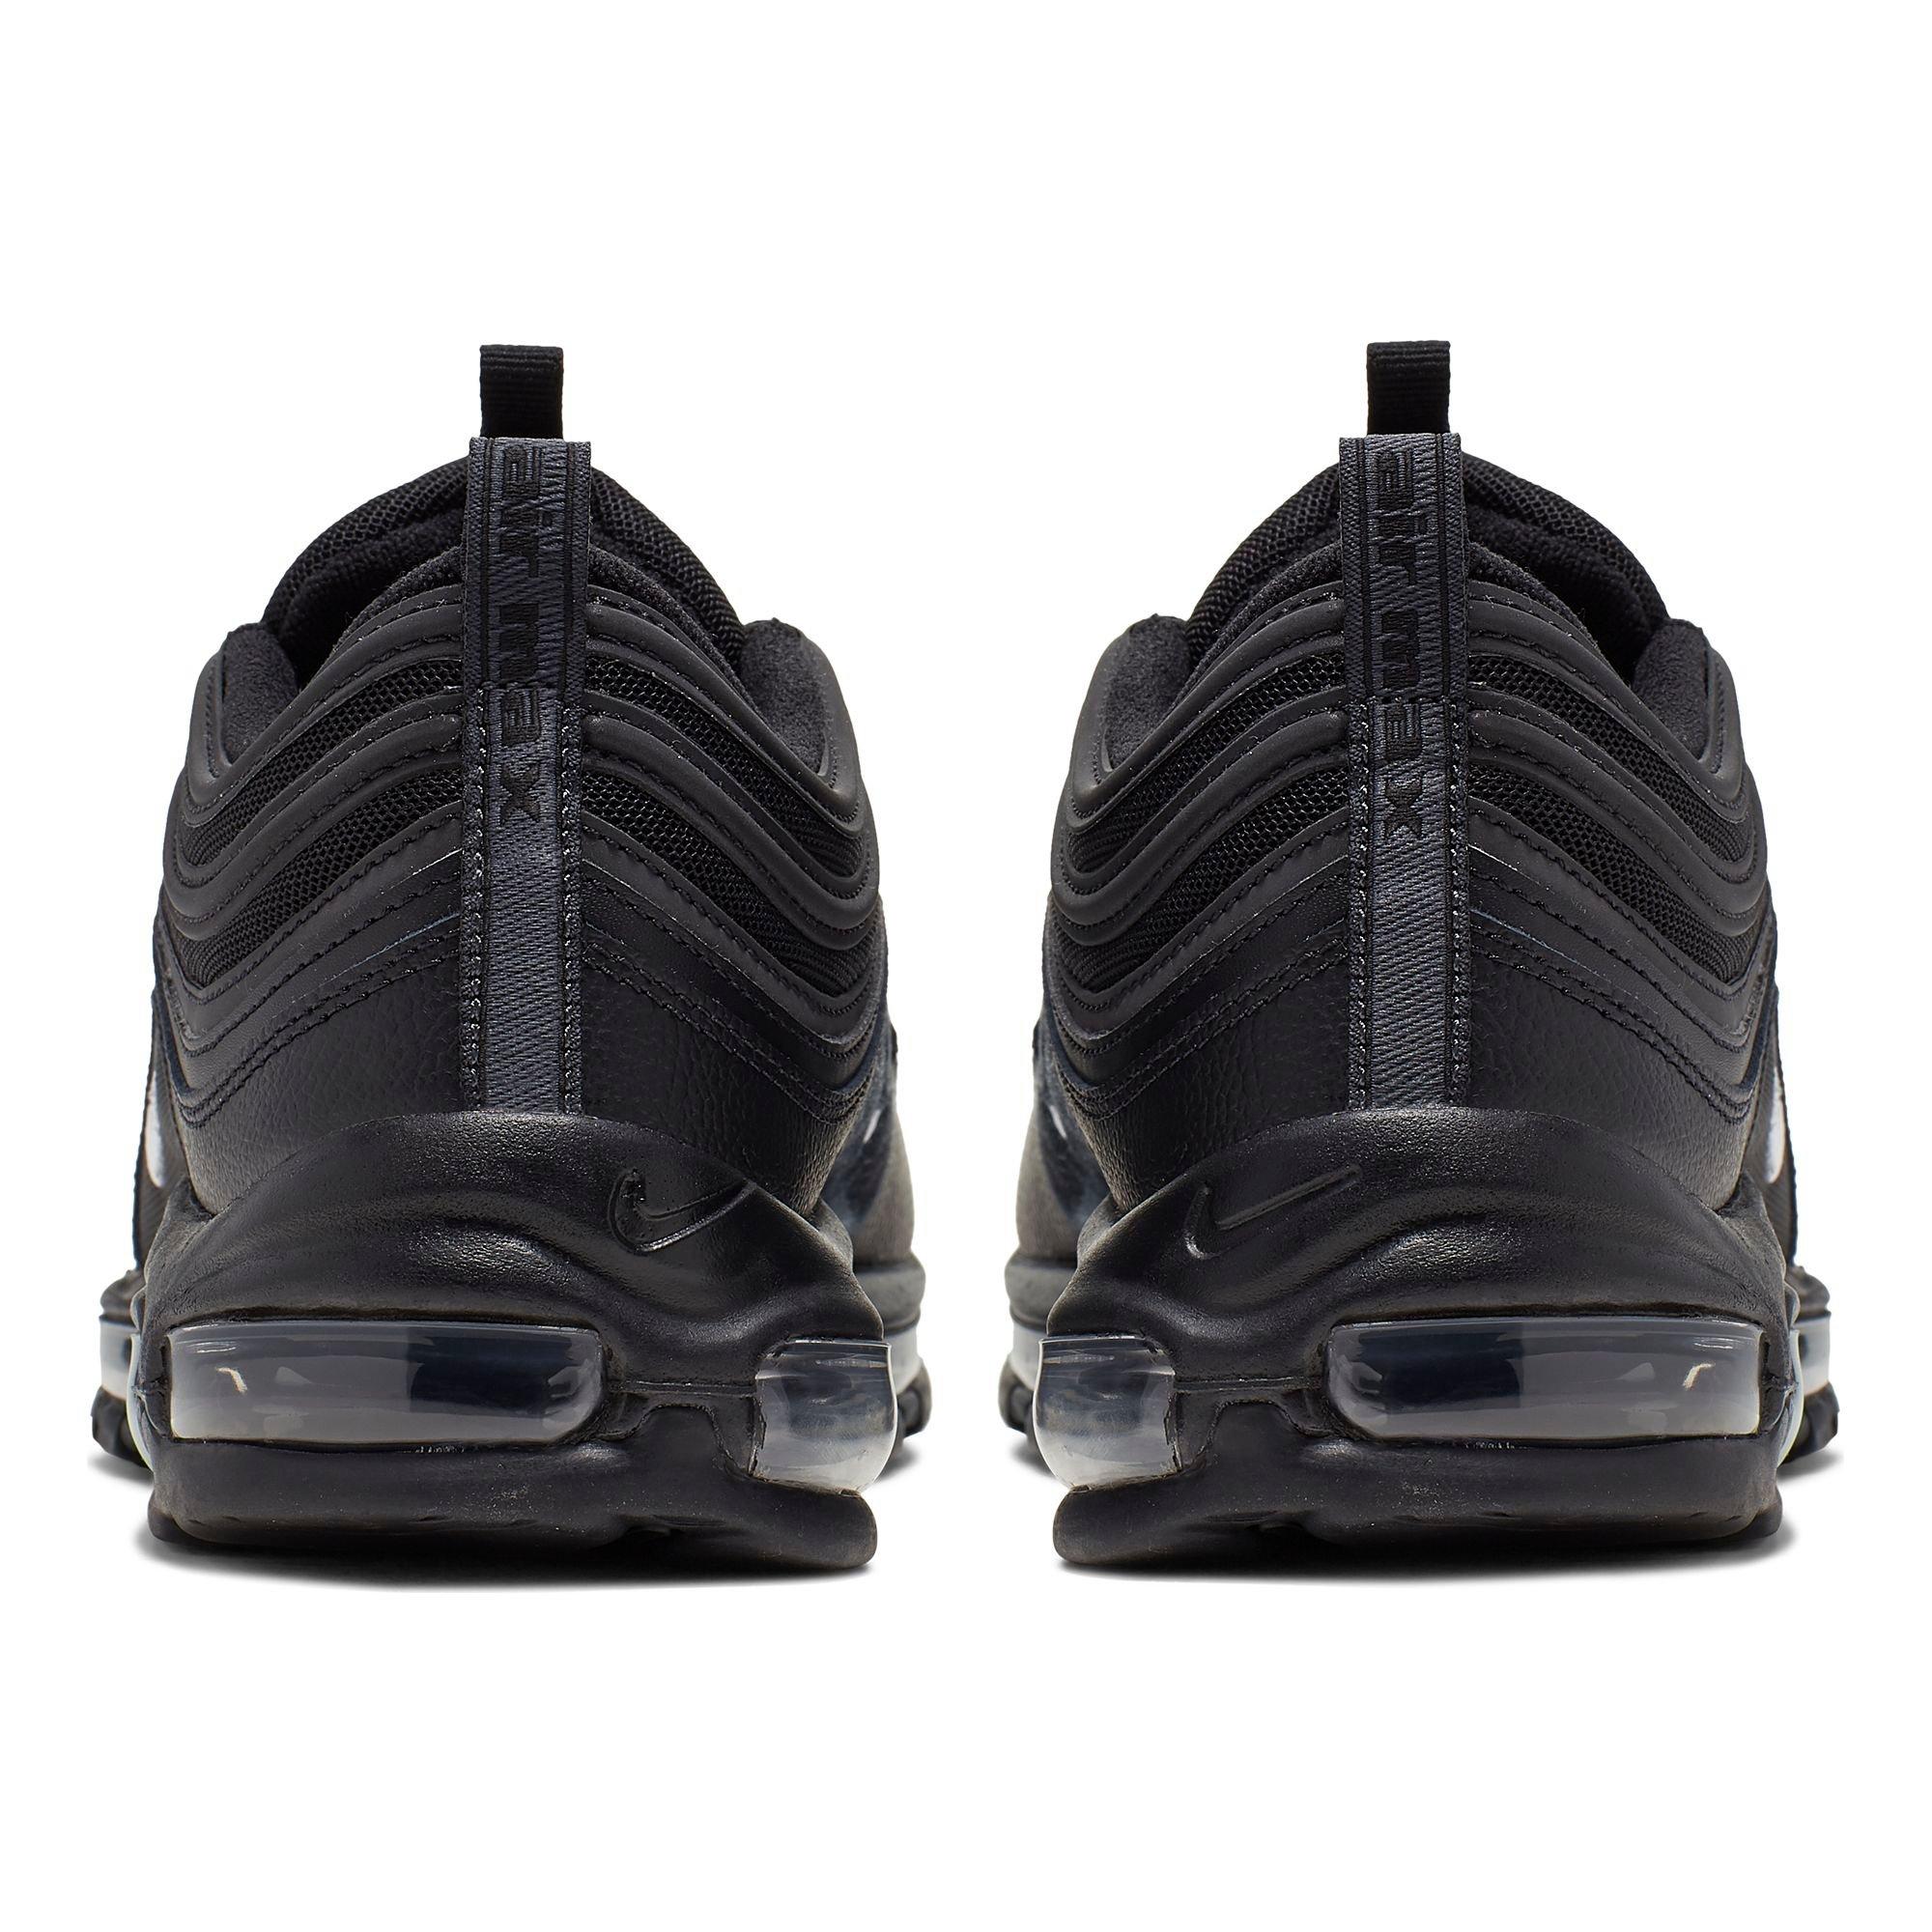 Nike Air Max 97 Men's Shoe Size 7.5 (Black)